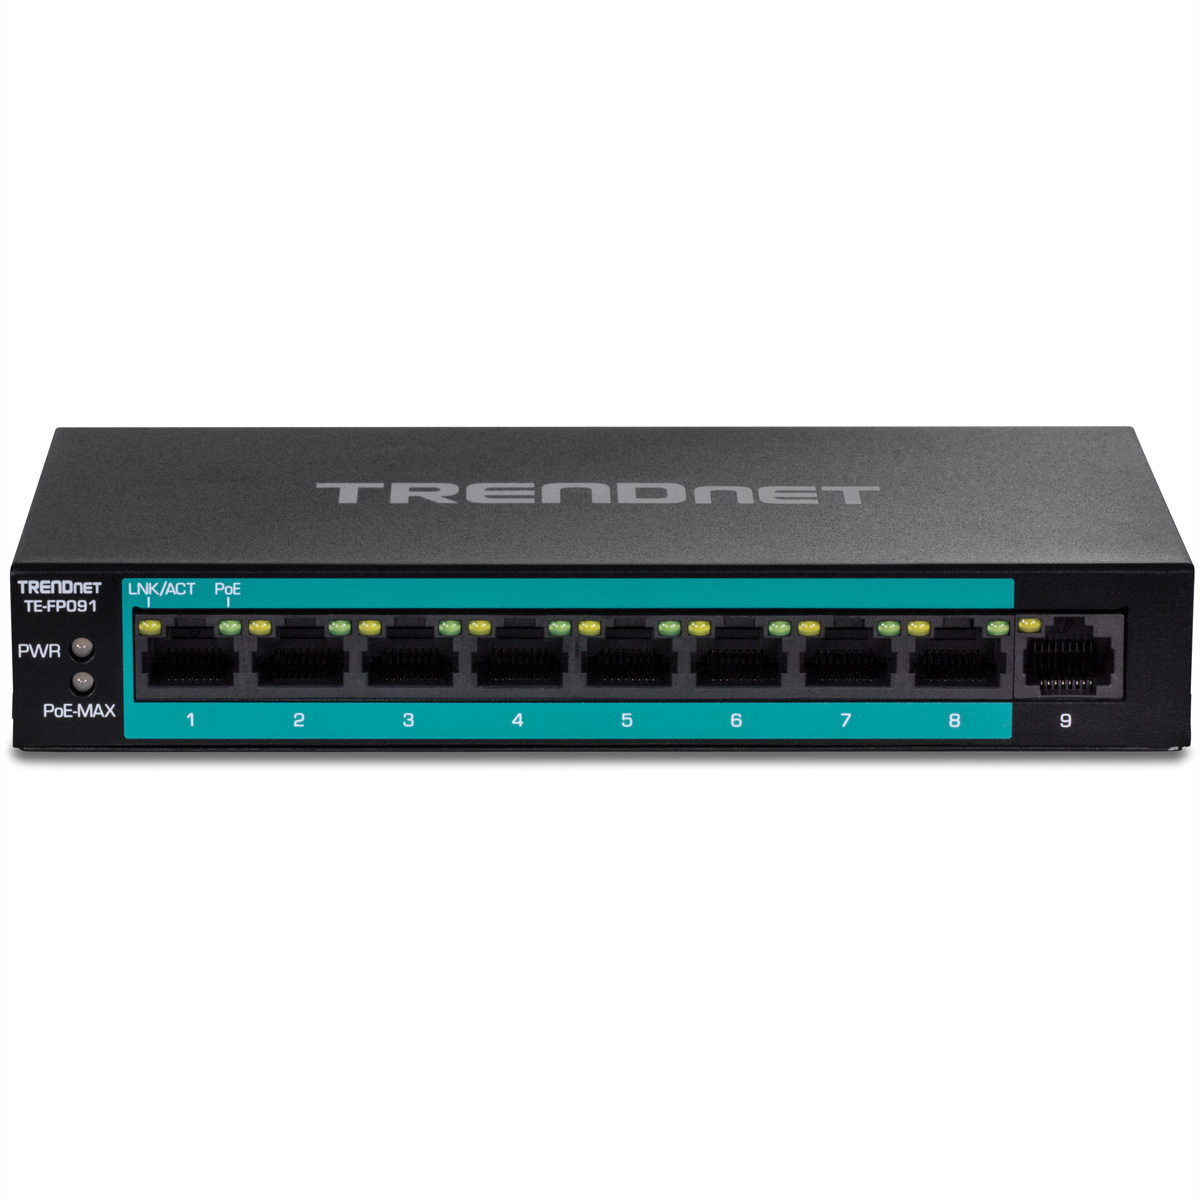 Switch TE-FP091 Range 9-Port PoE Switch Fast Long TRENDNET Ethernet Fast PoE+ Ethernet